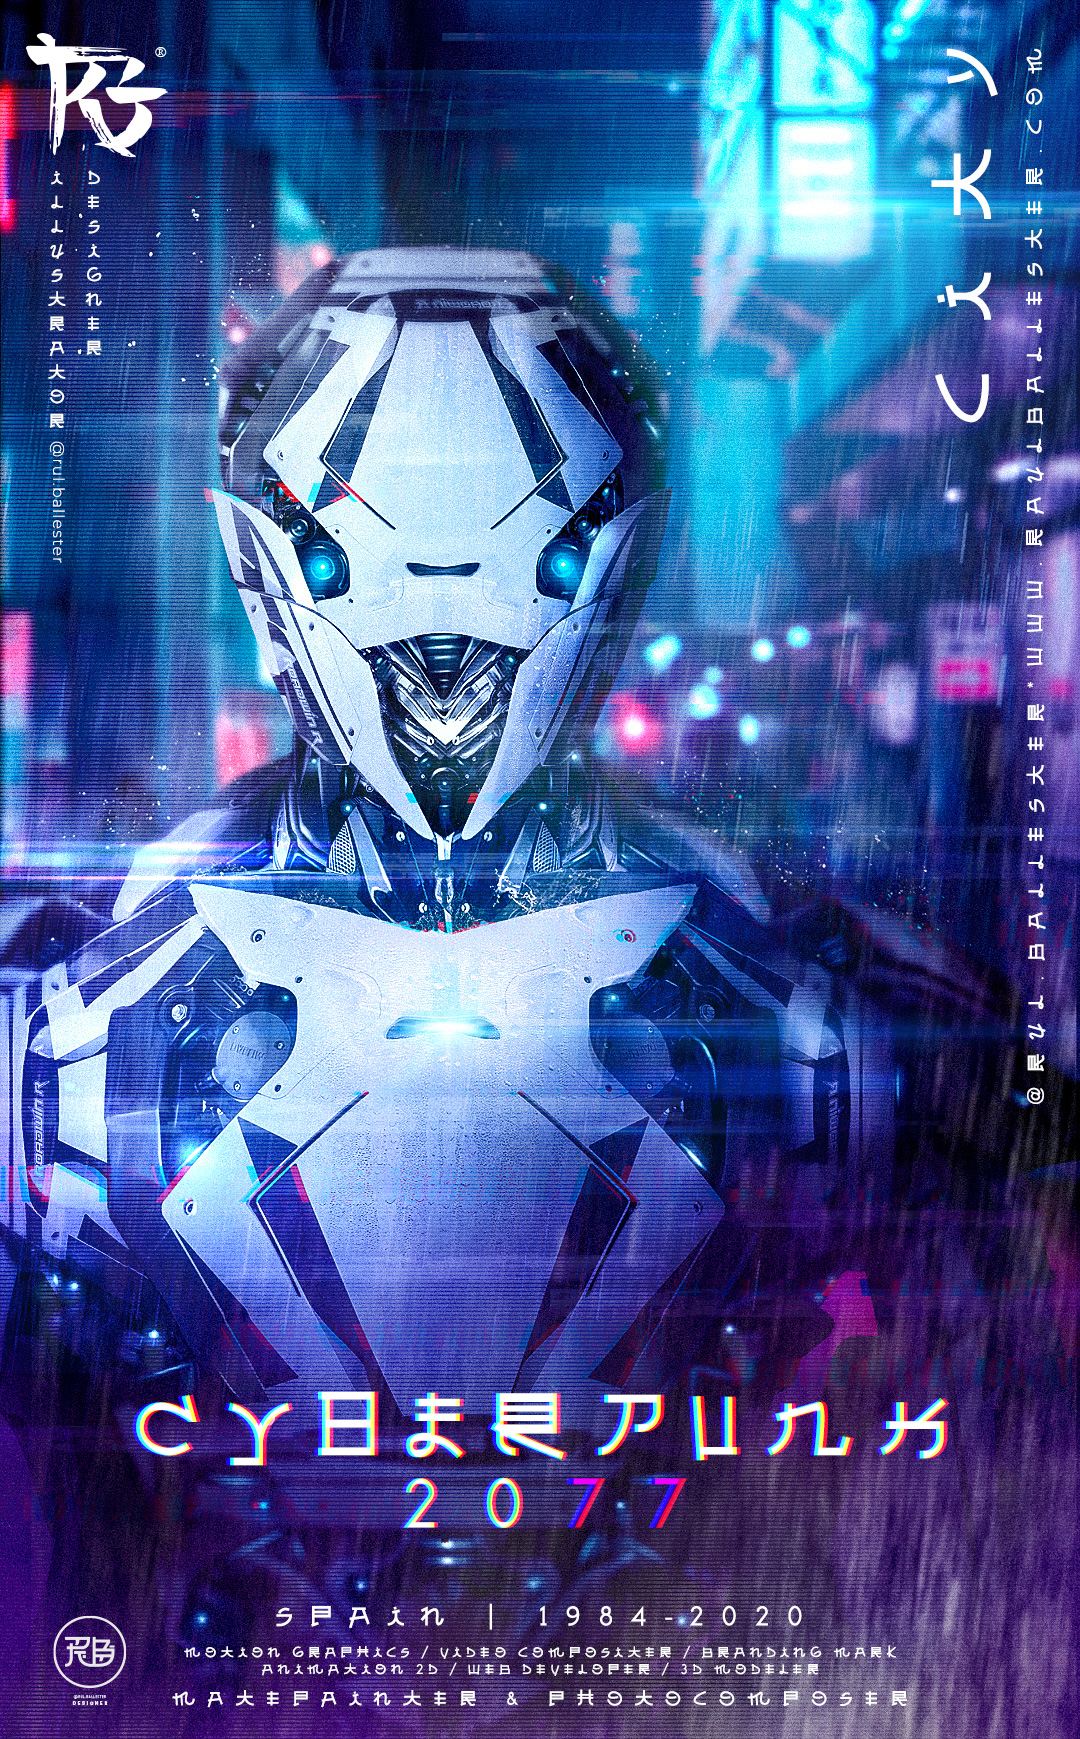 Cartel de película cyberpunk